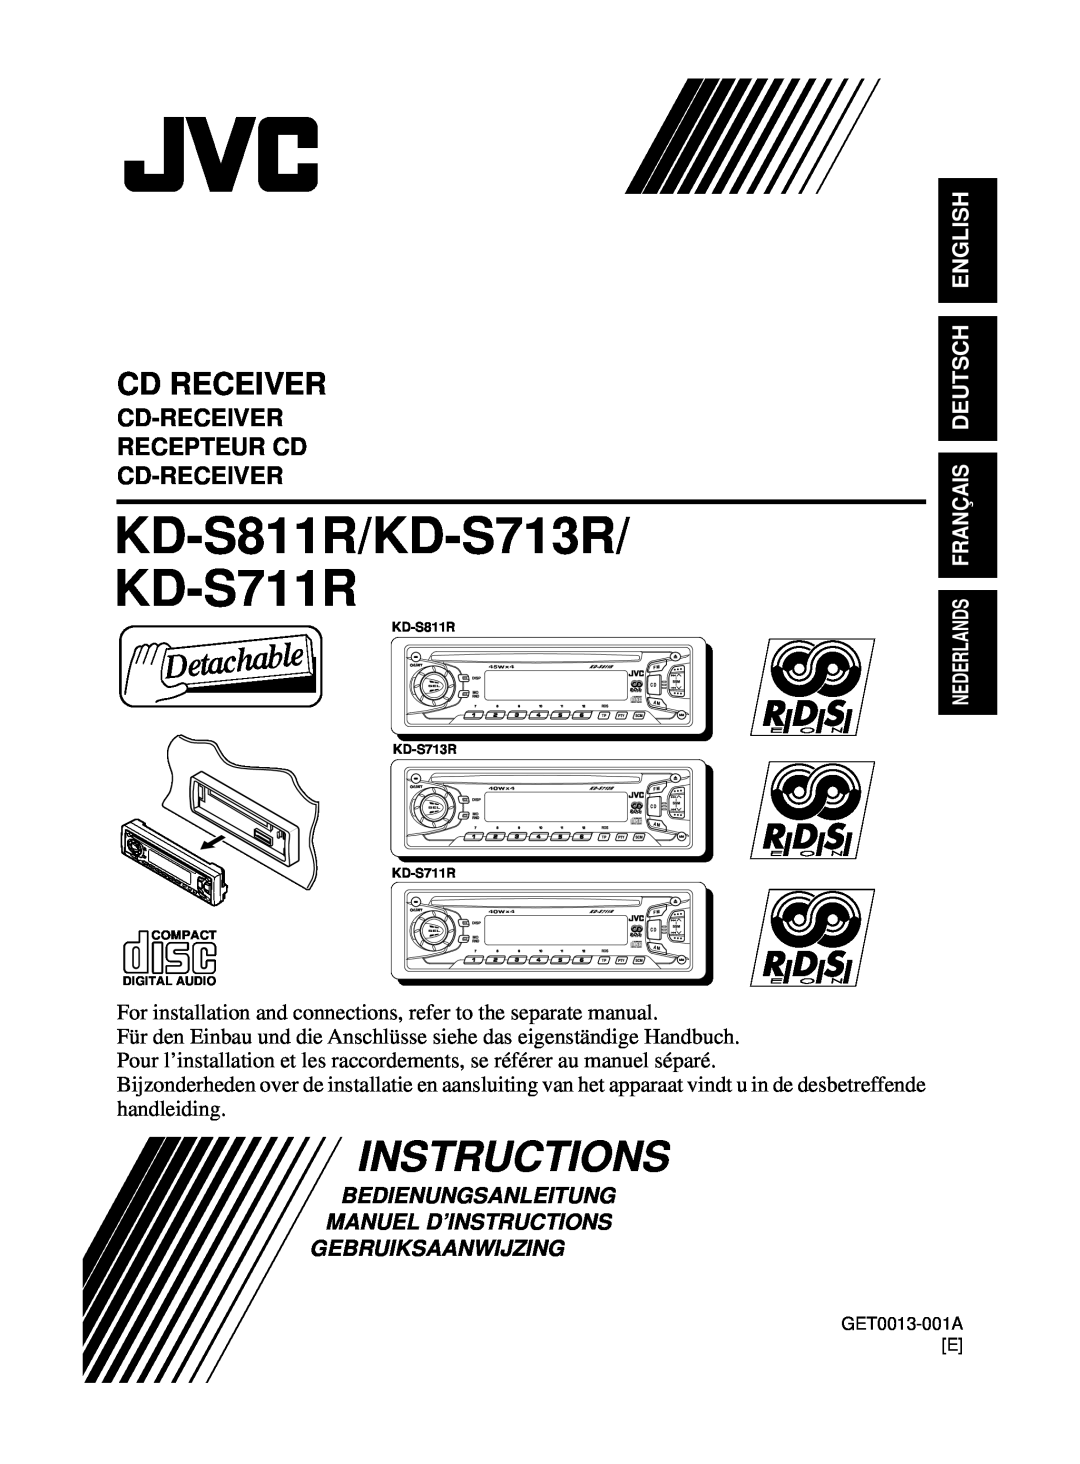 JVC manual Cd Receiver, Cd-Receiver Recepteur Cd Cd-Receiver, English Deutsch, KD-S811R/KD-S713R KD-S711R, Instructions 